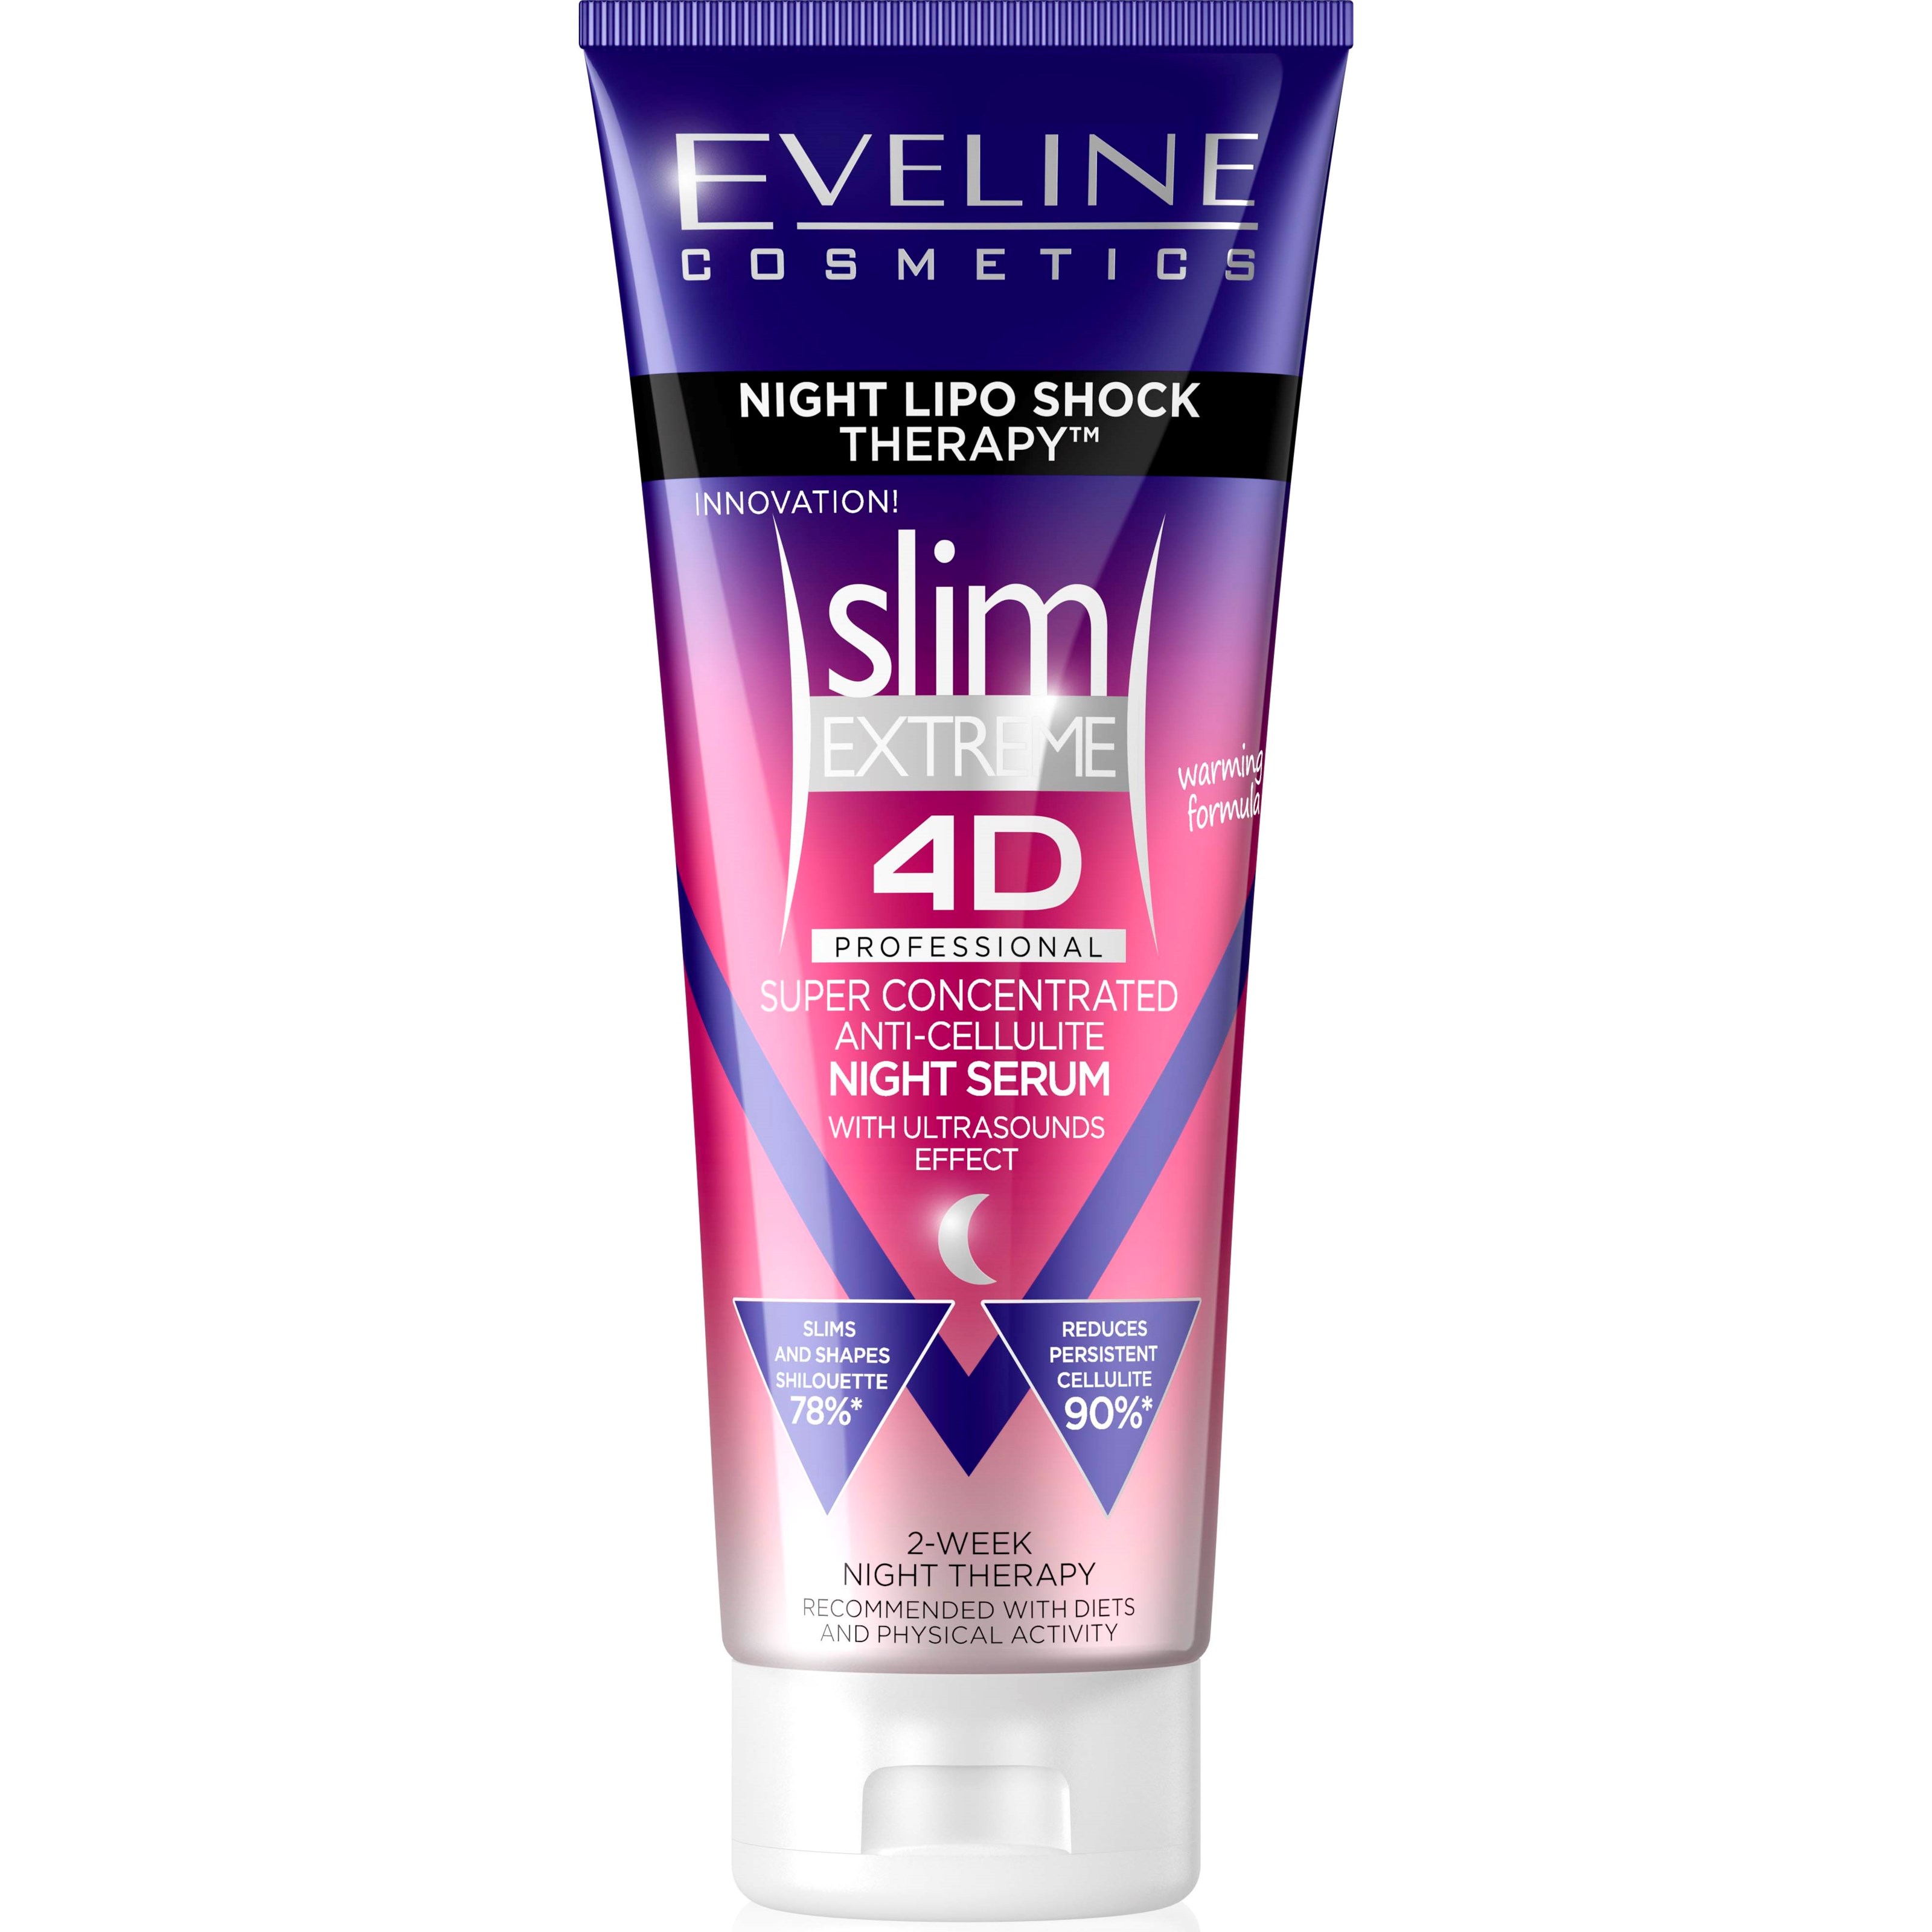 Bilde av Eveline Cosmetics Slim Extreme 4d Professional Night Lipo Shock Therap